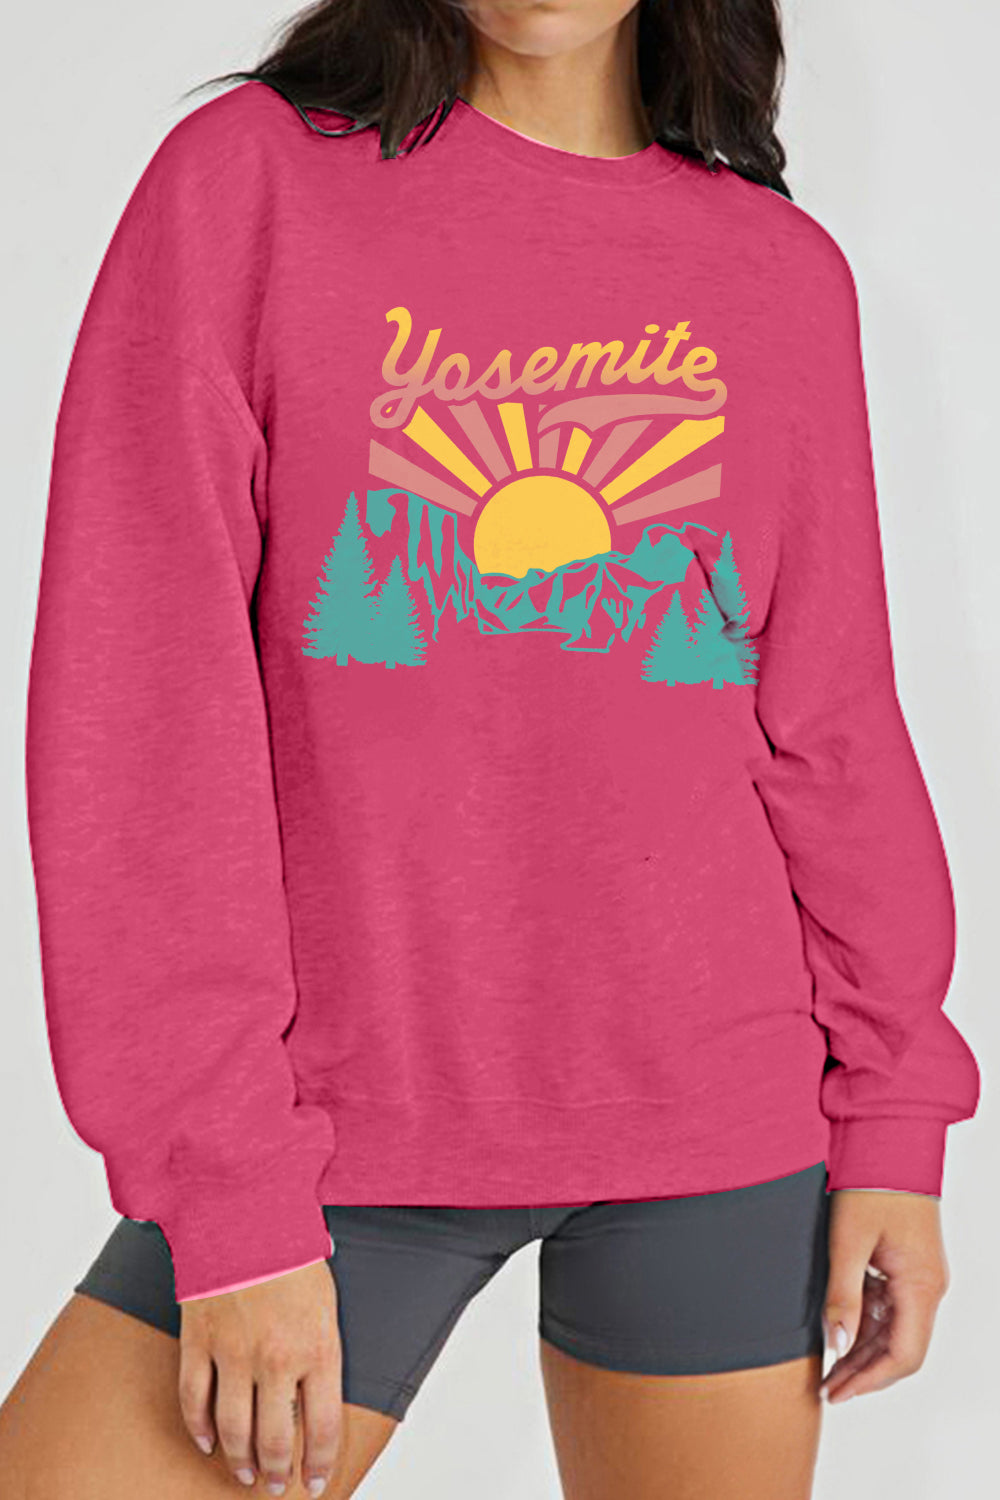 YOSEMITE Graphic Sweatshirt | AdoreStarr